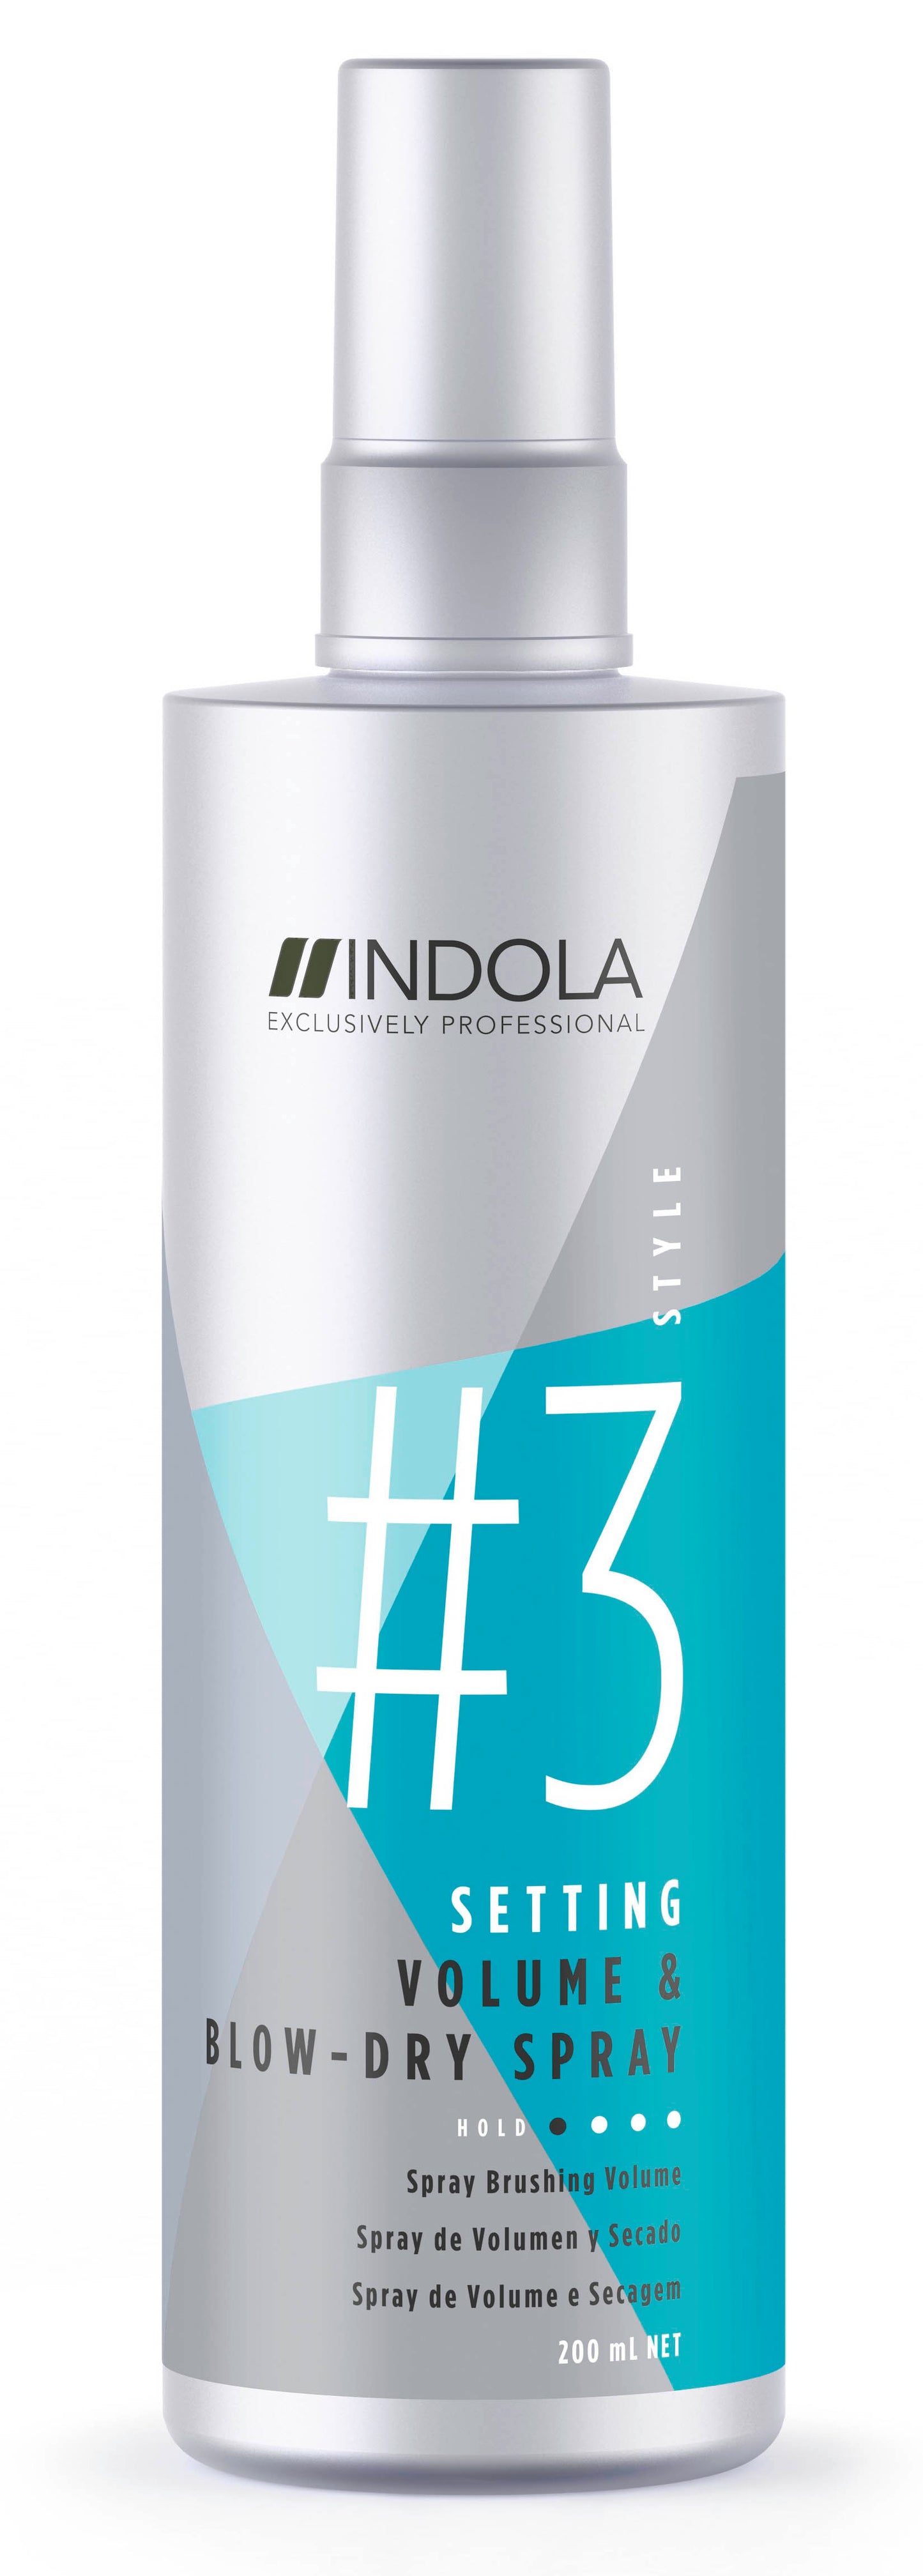 Indola Volume & blow-dry spray 200ml